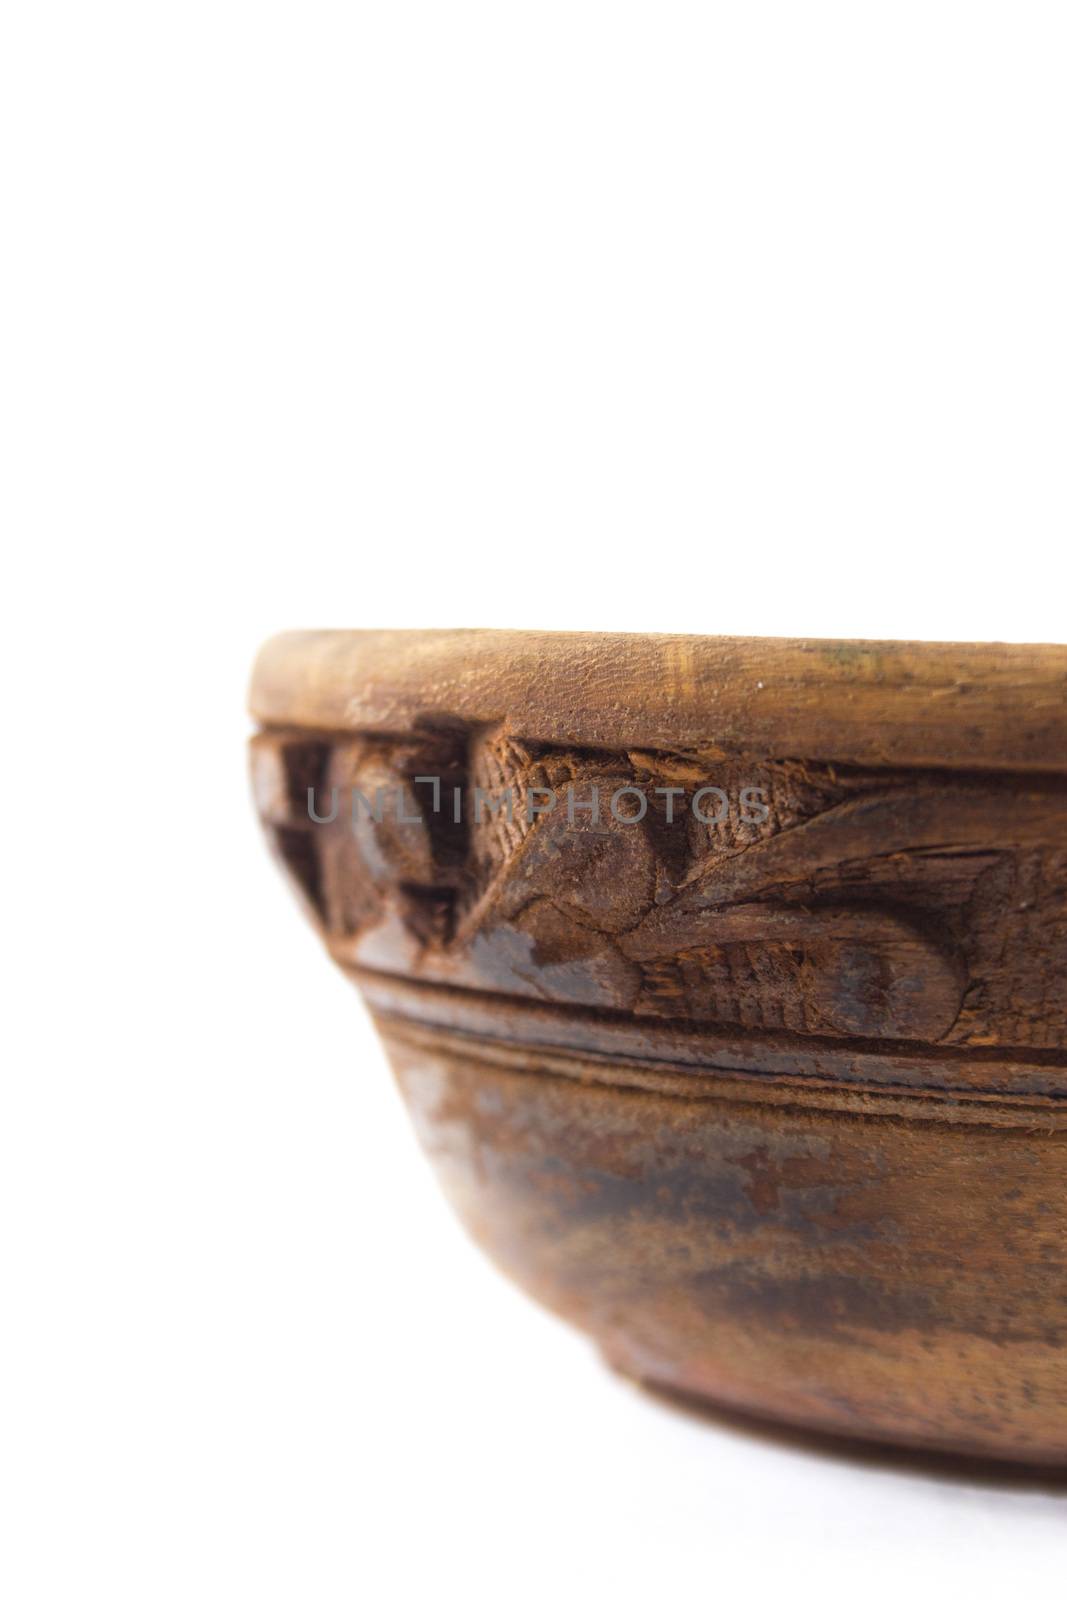 Empty wooden bowl by designsstock